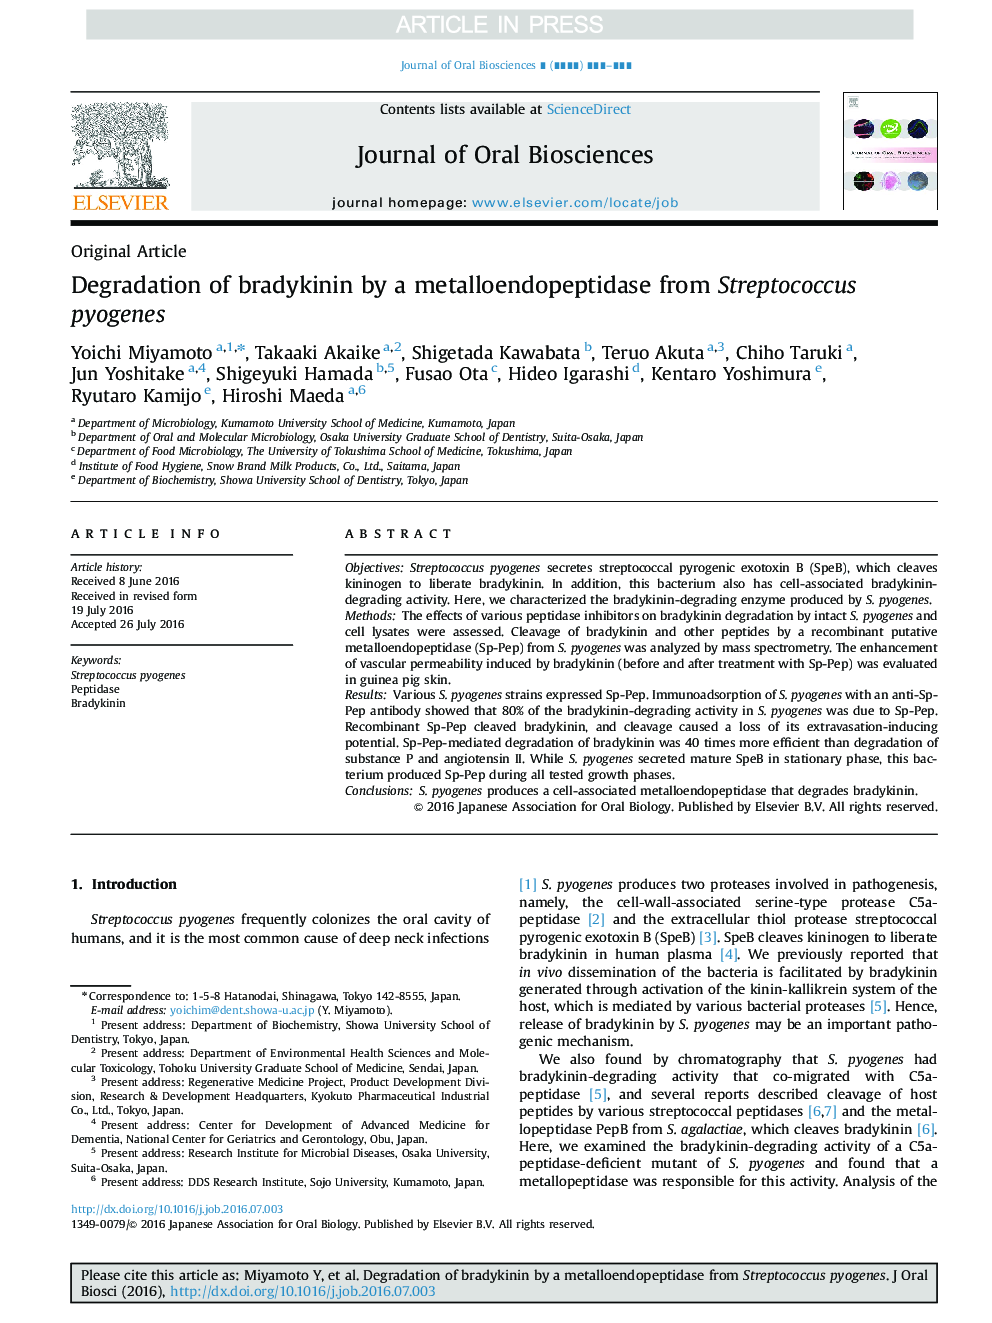 Degradation of bradykinin by a metalloendopeptidase from Streptococcus pyogenes